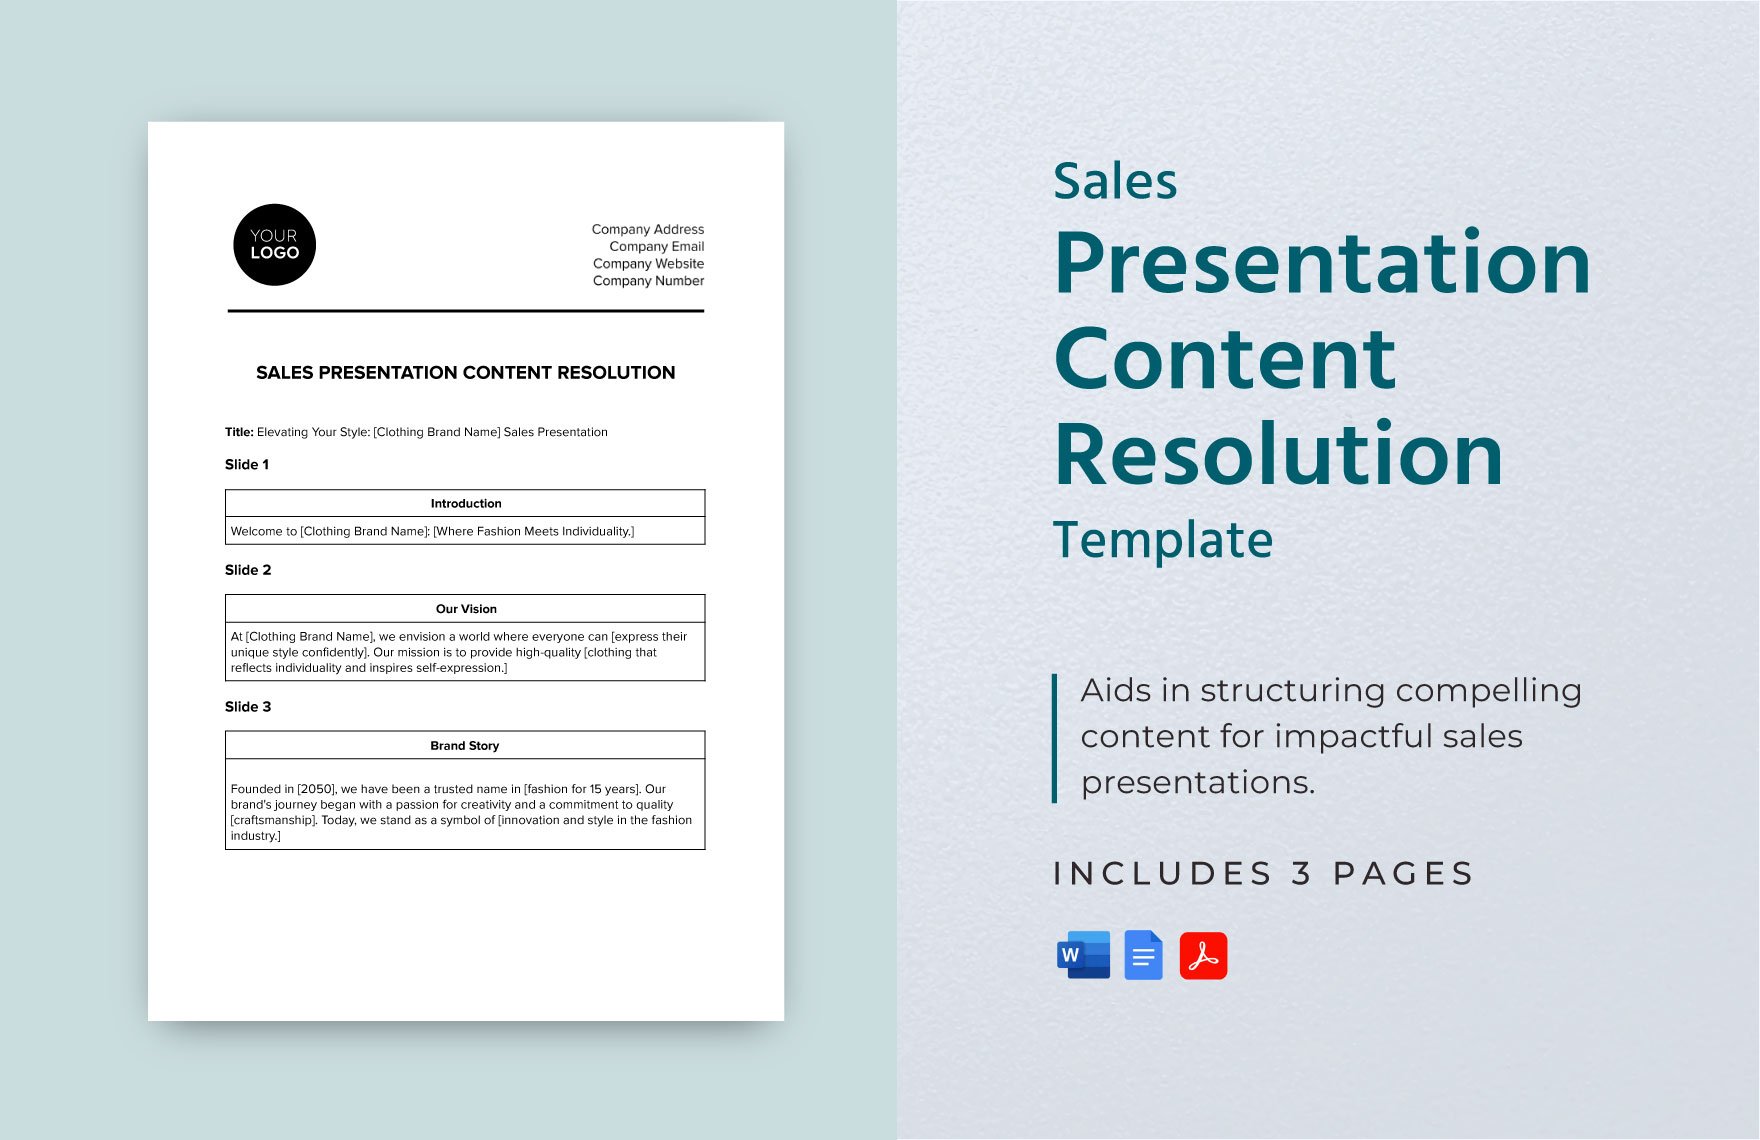 Sales Presentation Content Resolution Template